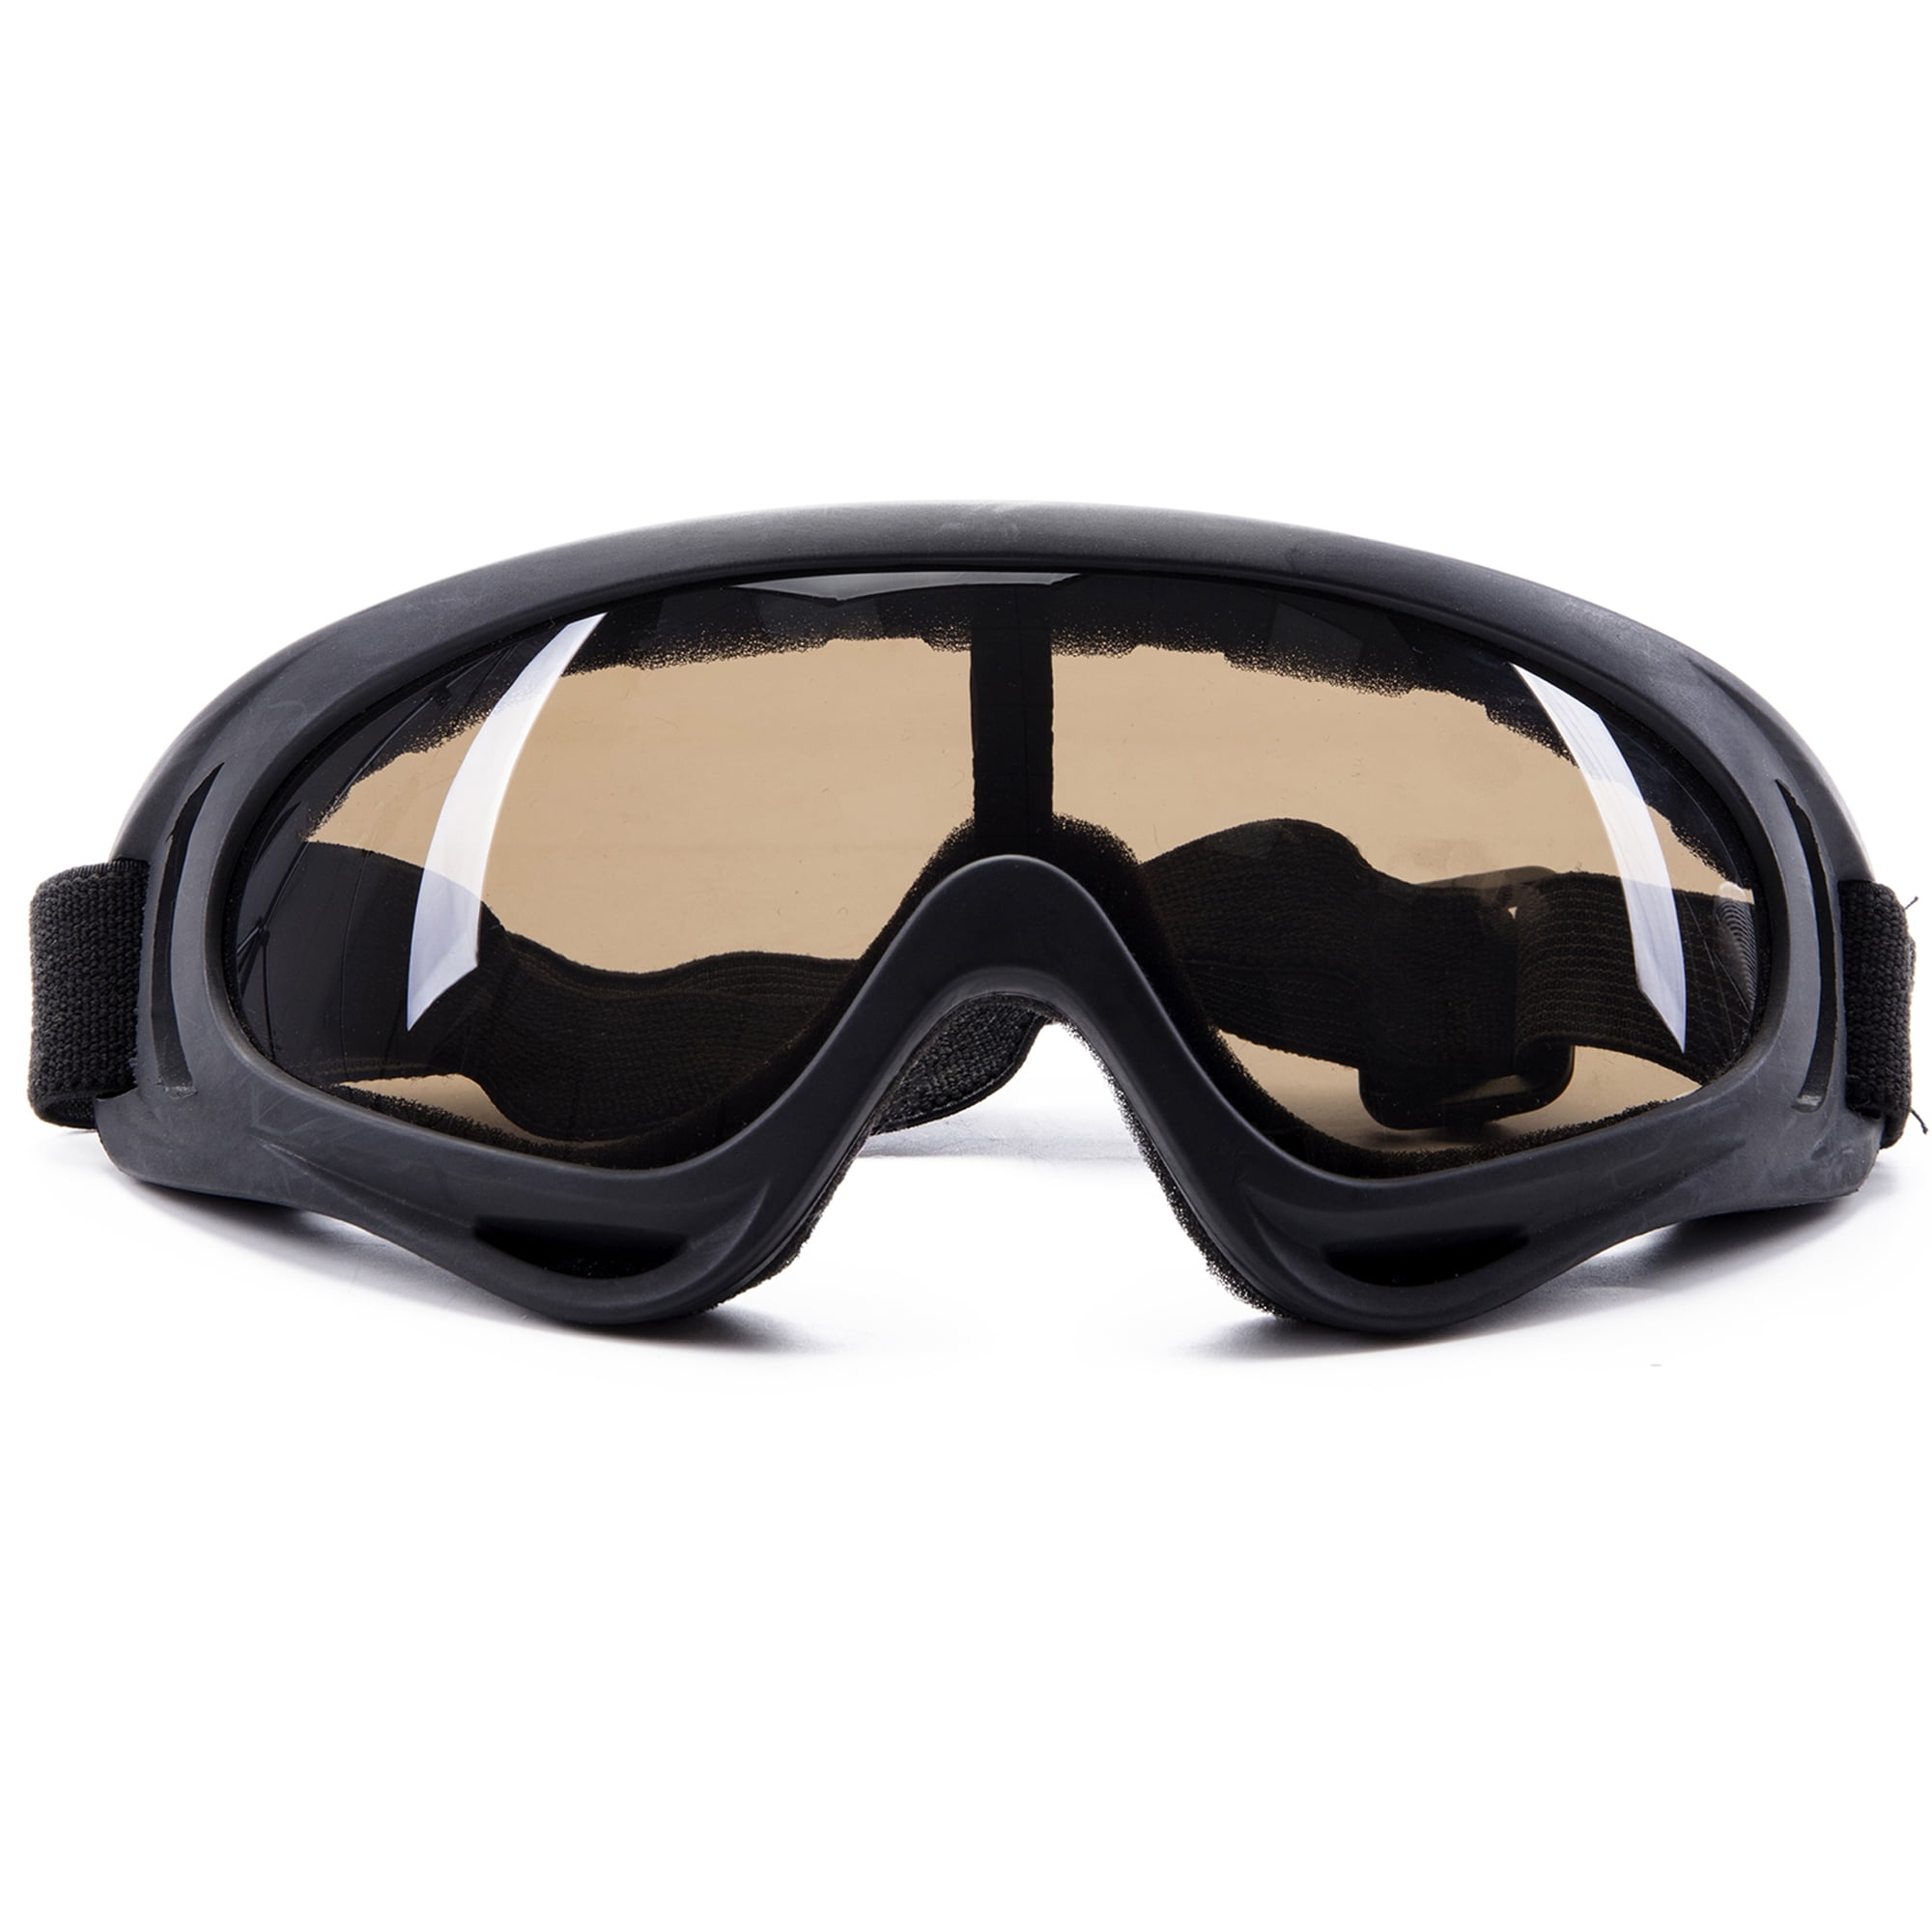 Winter Snowboard Sport Goggles UV Protection Adjustable Sunglasses Windproof Dustproof Anti Fog for ATV Racing Motorbike Climbing Skating Amycute Motorcycle Goggles Ski Goggles over Glasses for Men Women 